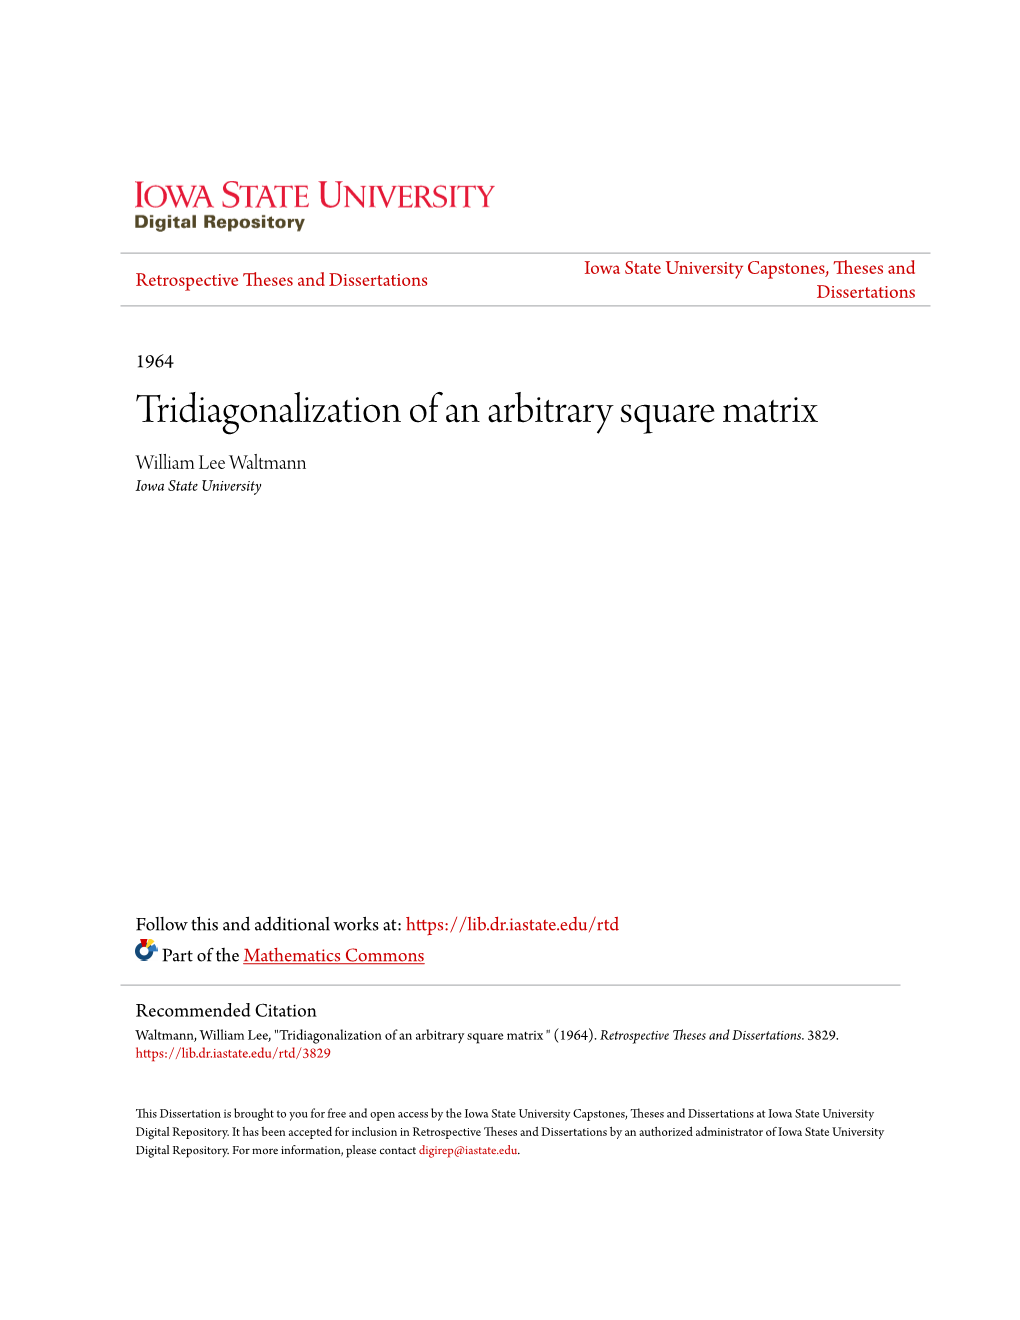 Tridiagonalization of an Arbitrary Square Matrix William Lee Waltmann Iowa State University